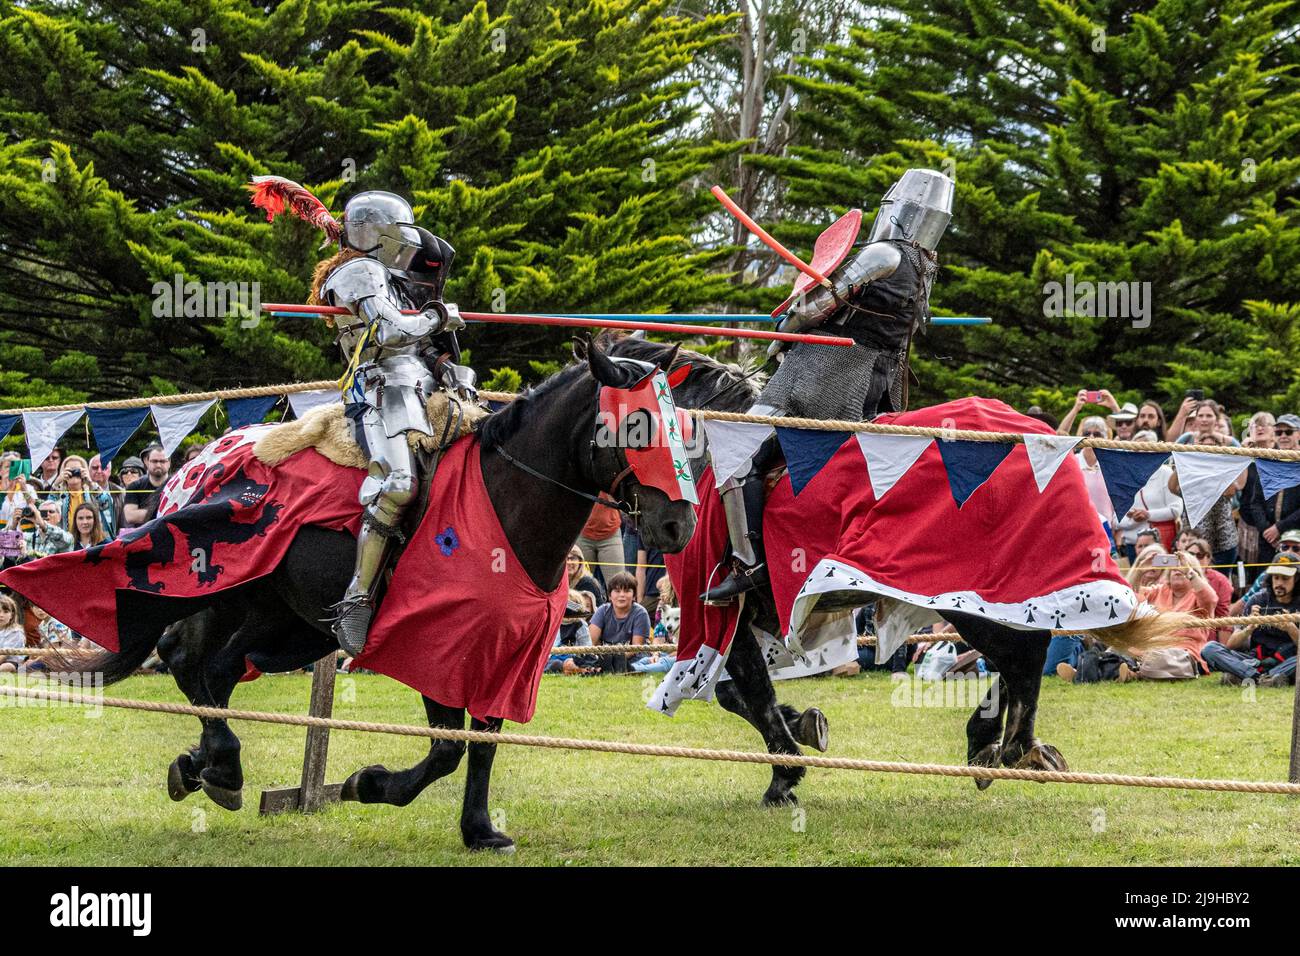 Knights on horseback during jousting tournament demonstration at Glen Innes Celtic Festival. New South Wales, Australia Stock Photo